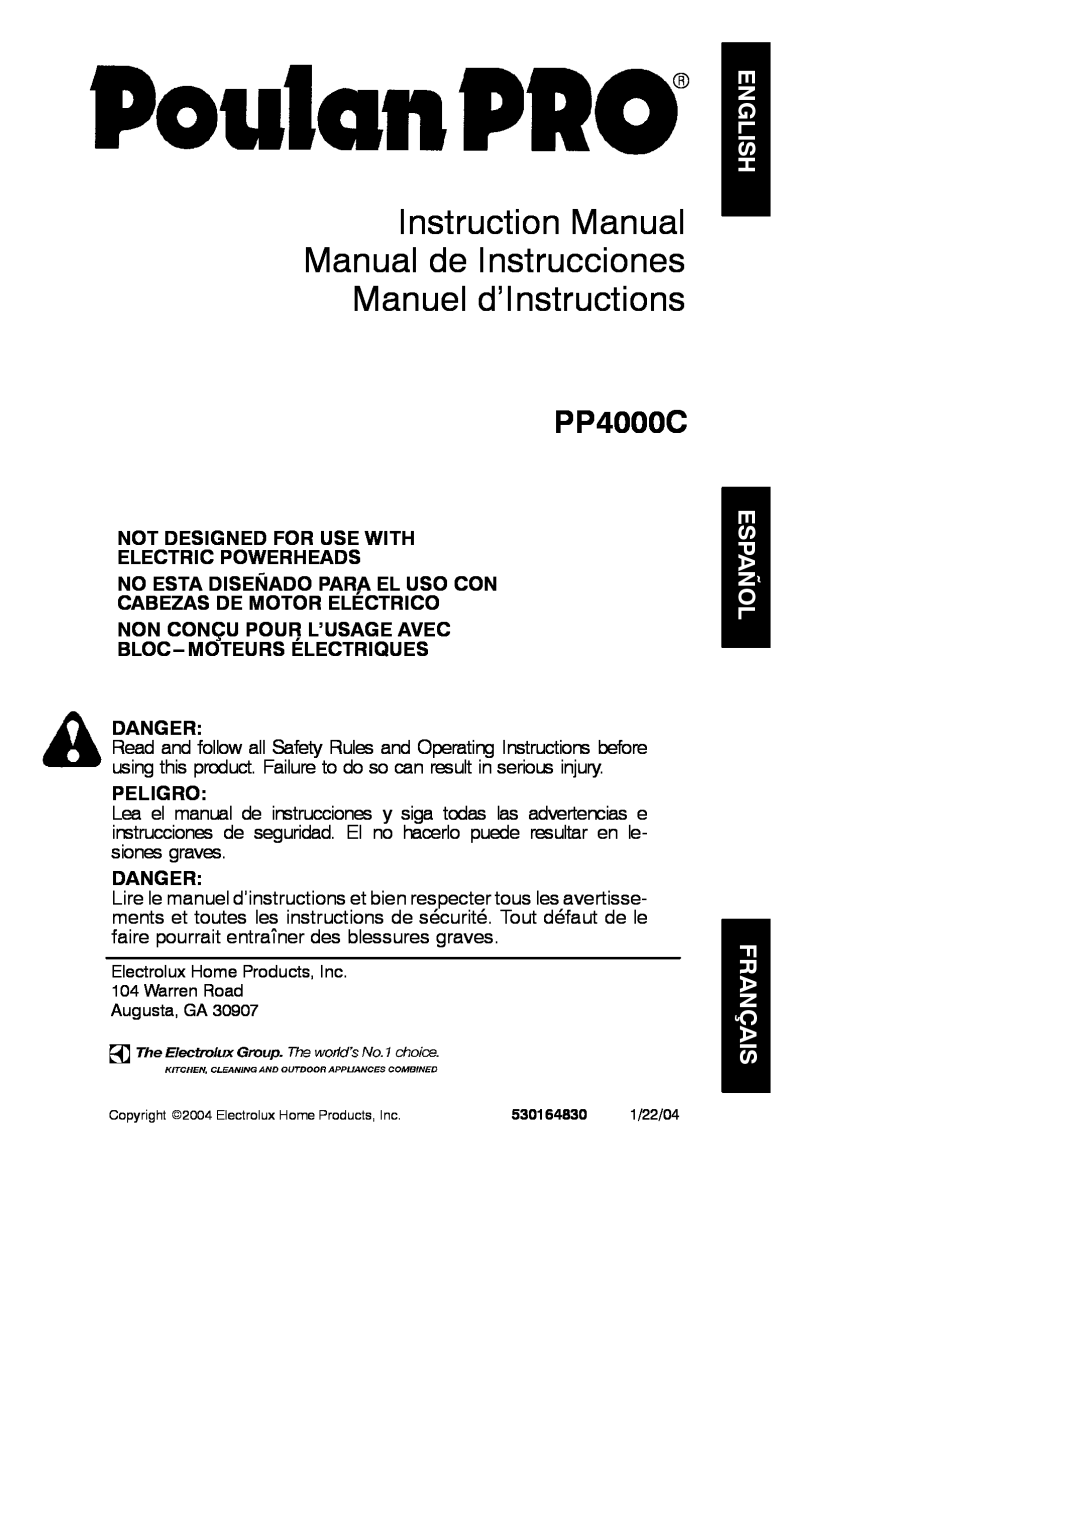 Poulan 530164830 instruction manual Danger, Peligro, PP4000C, English, Español Français, No Esta Diseñado Para El Uso Con 